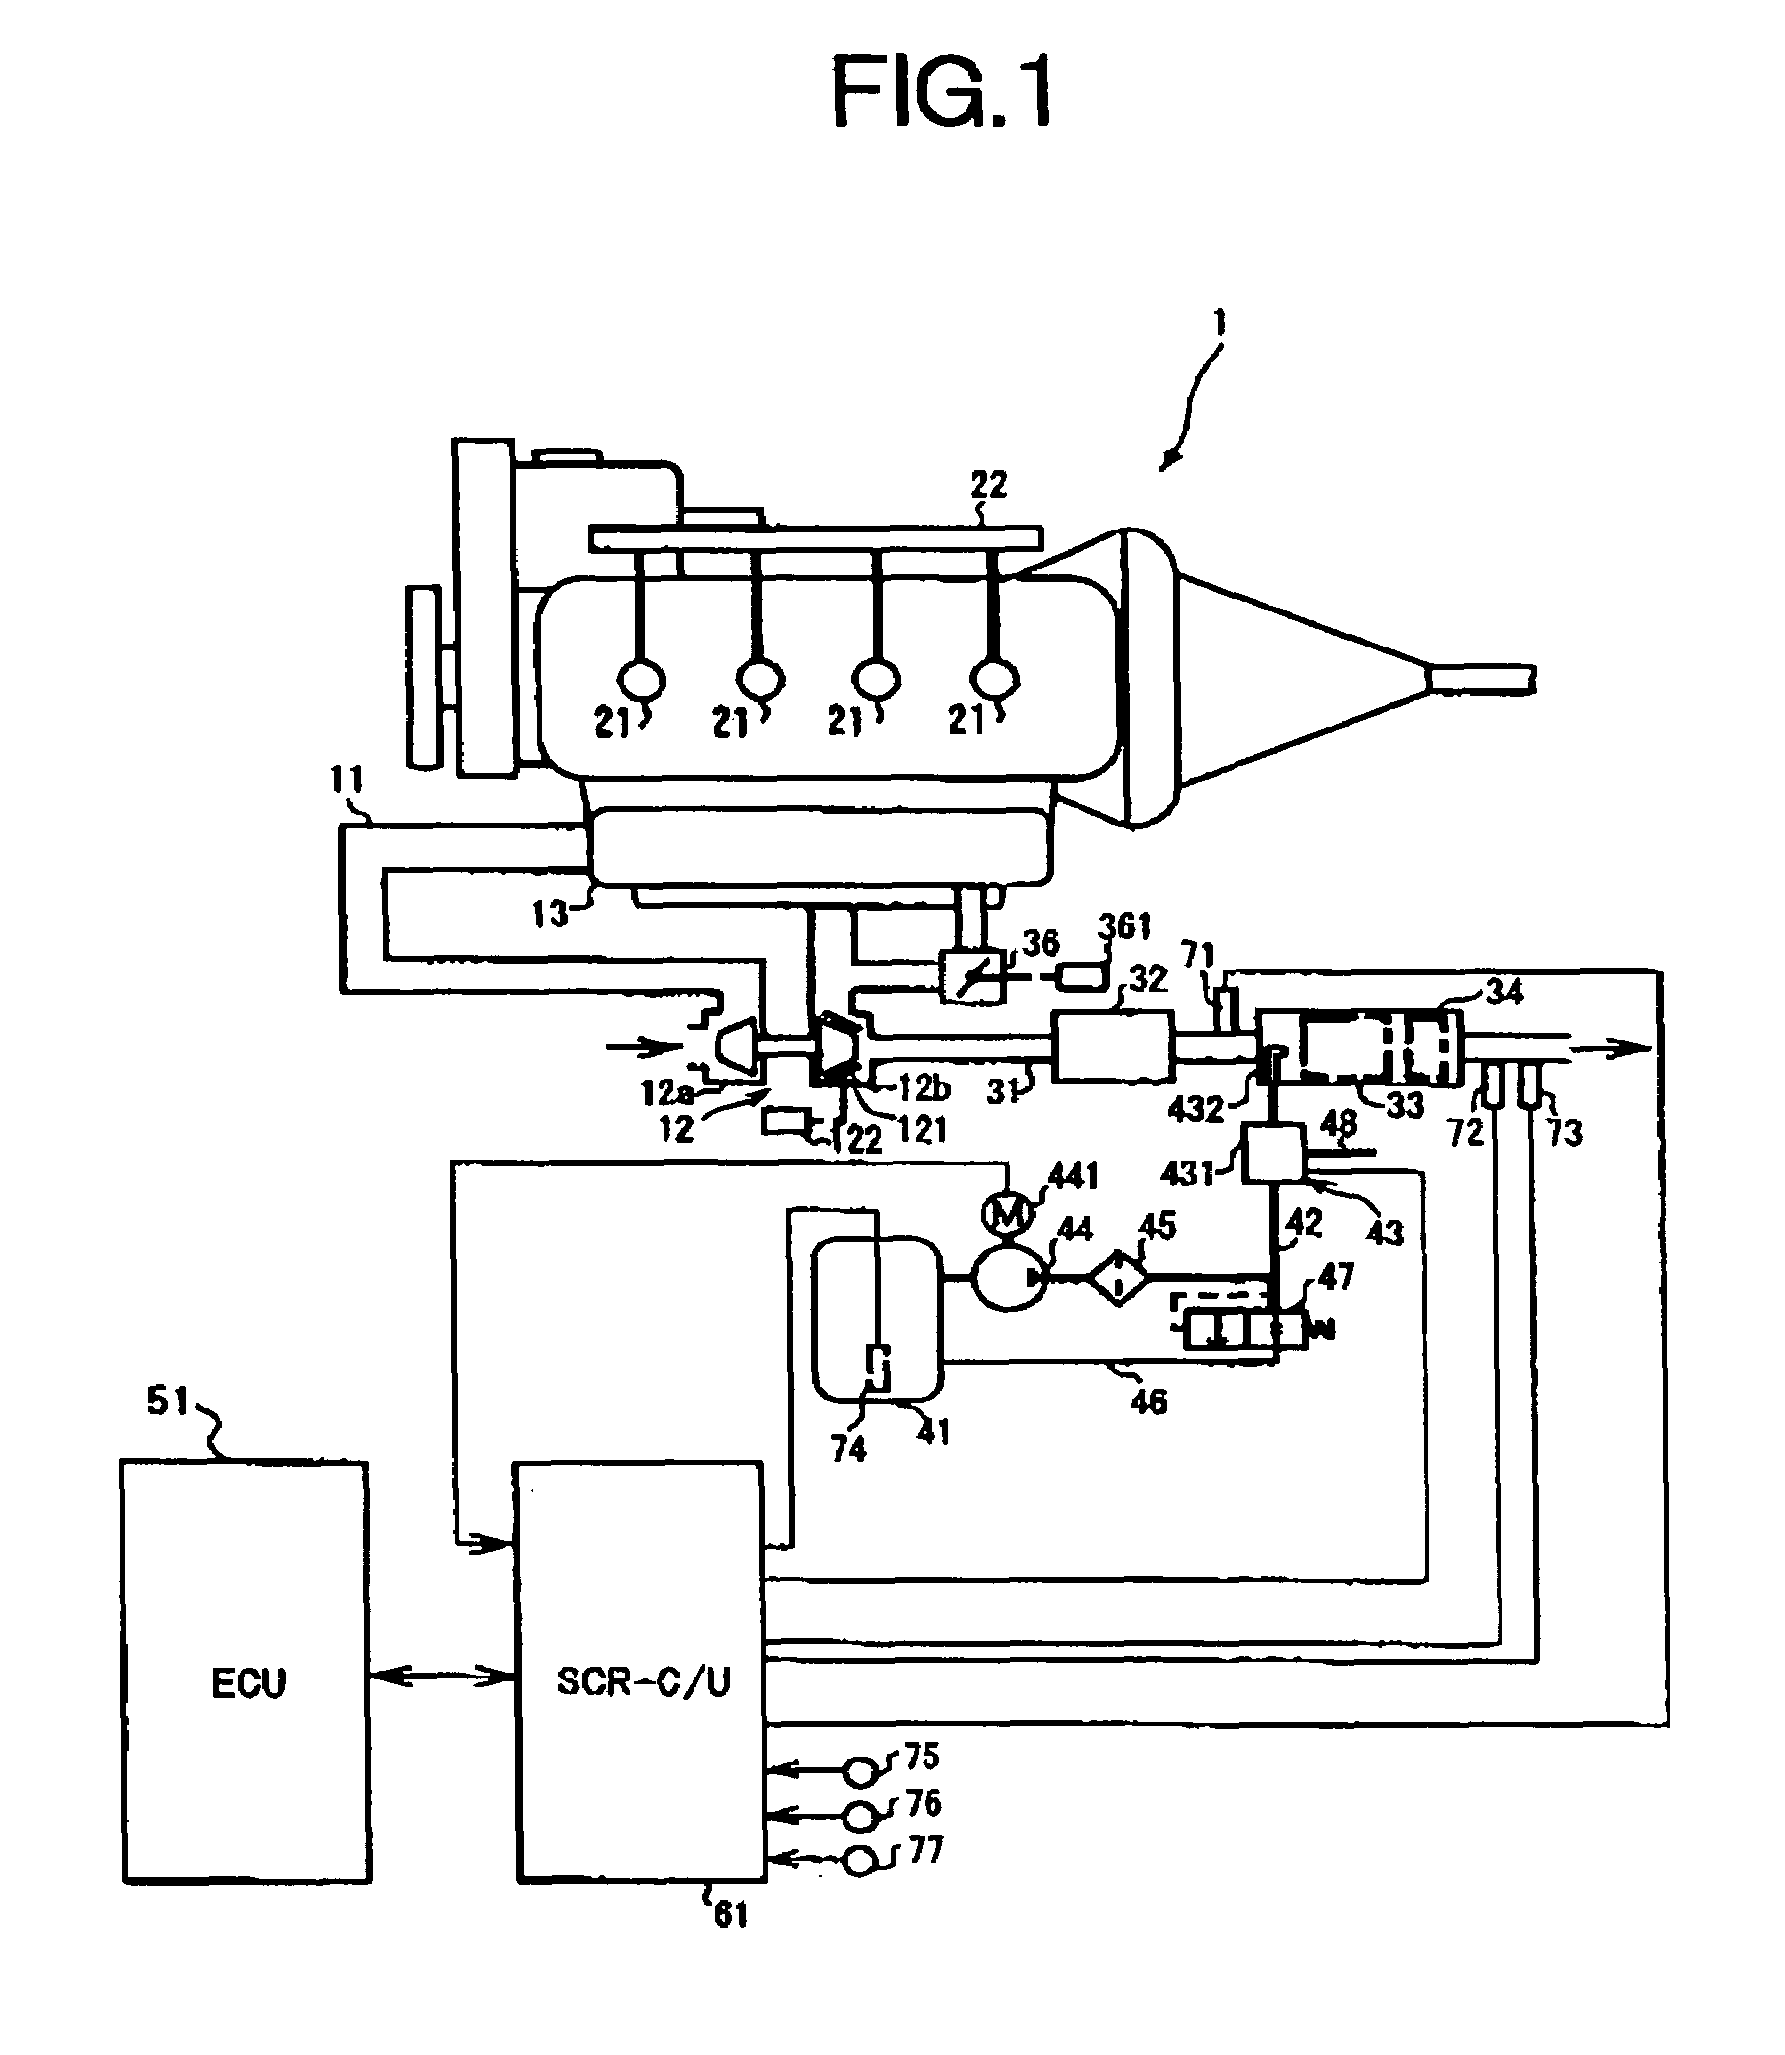 Engine control apparatus and engine operating method